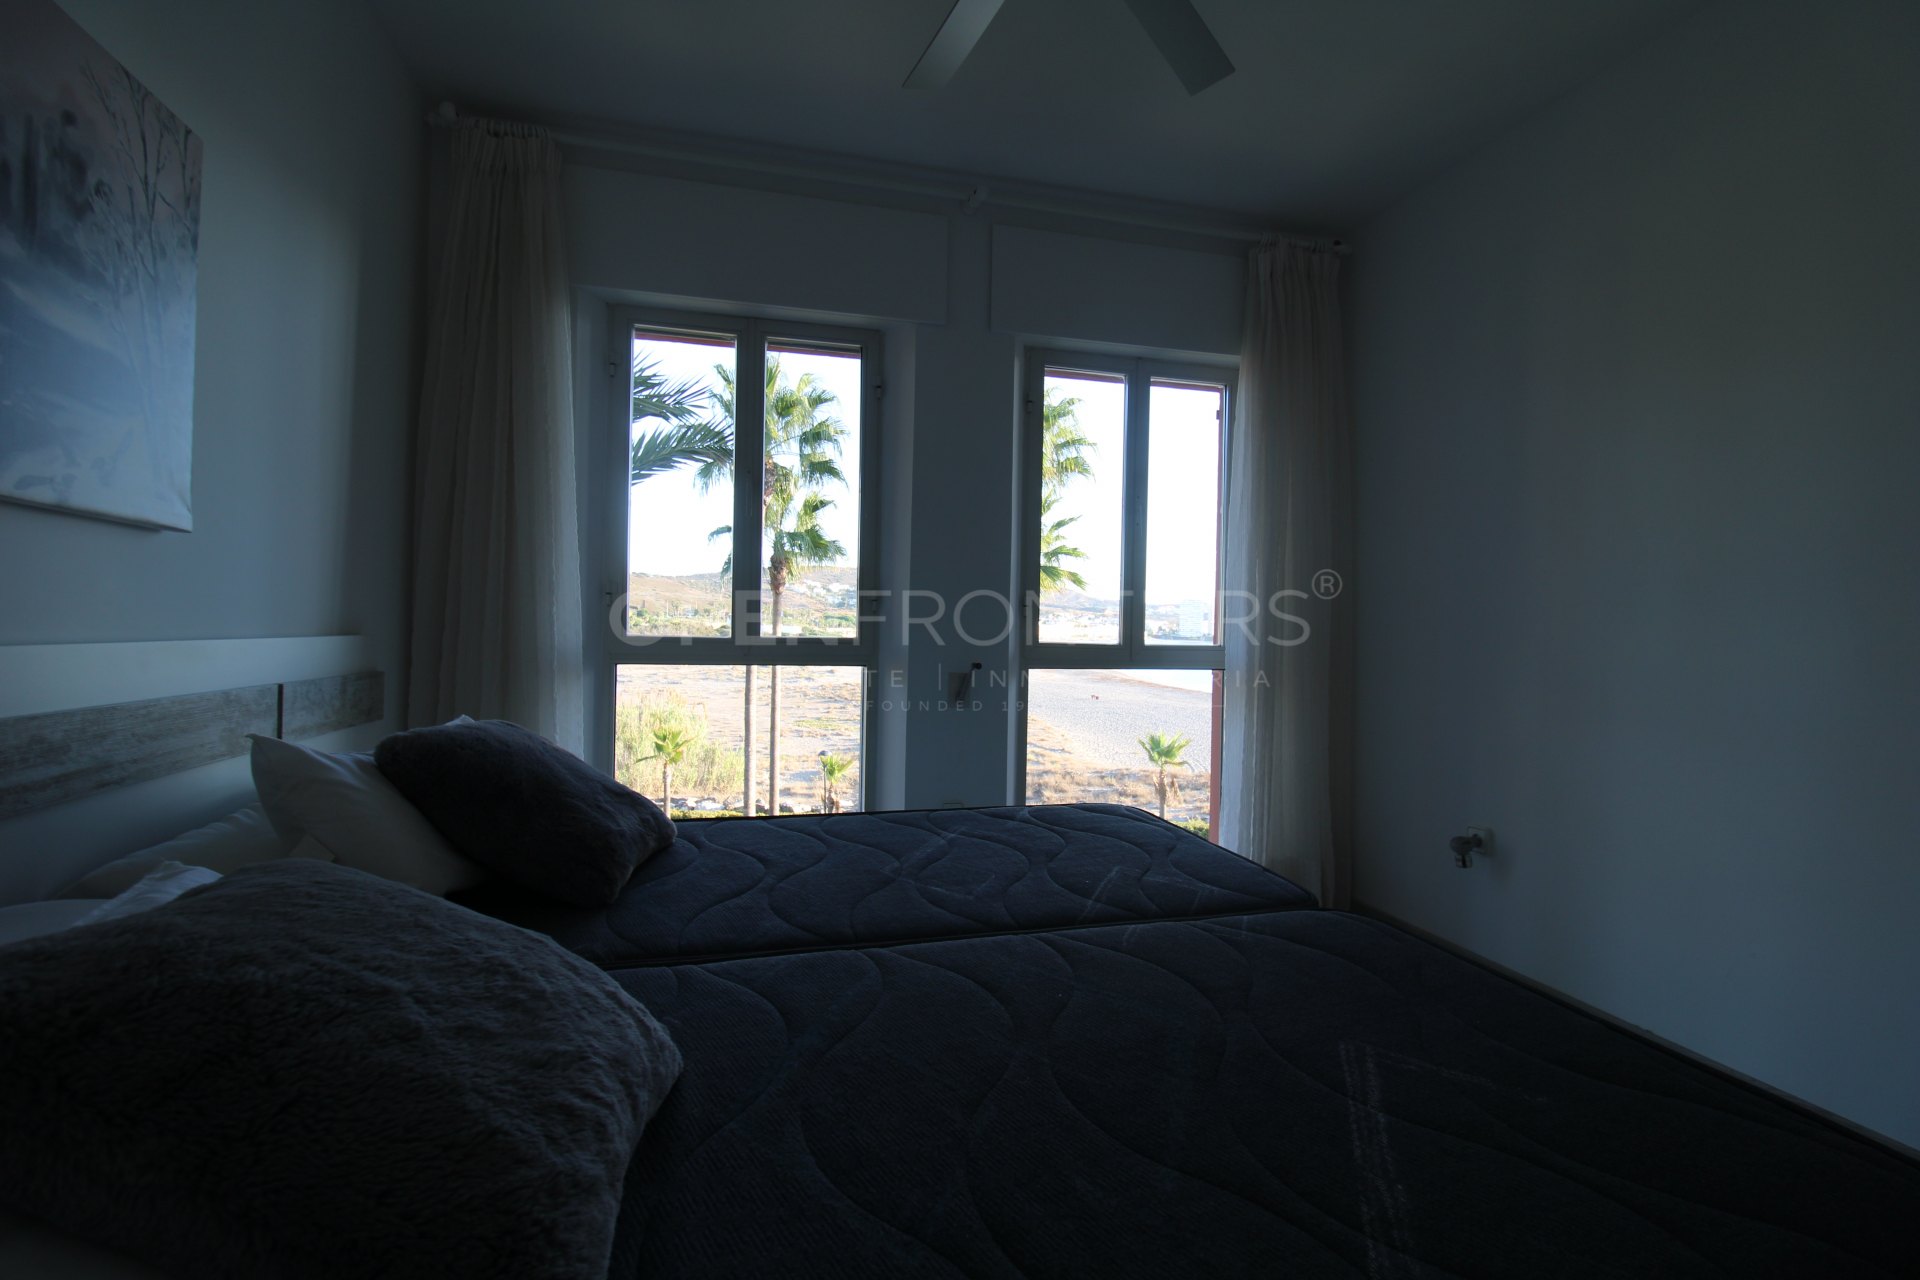 3 Bedroom Apartment in Sotogrande Puerto Deportivo